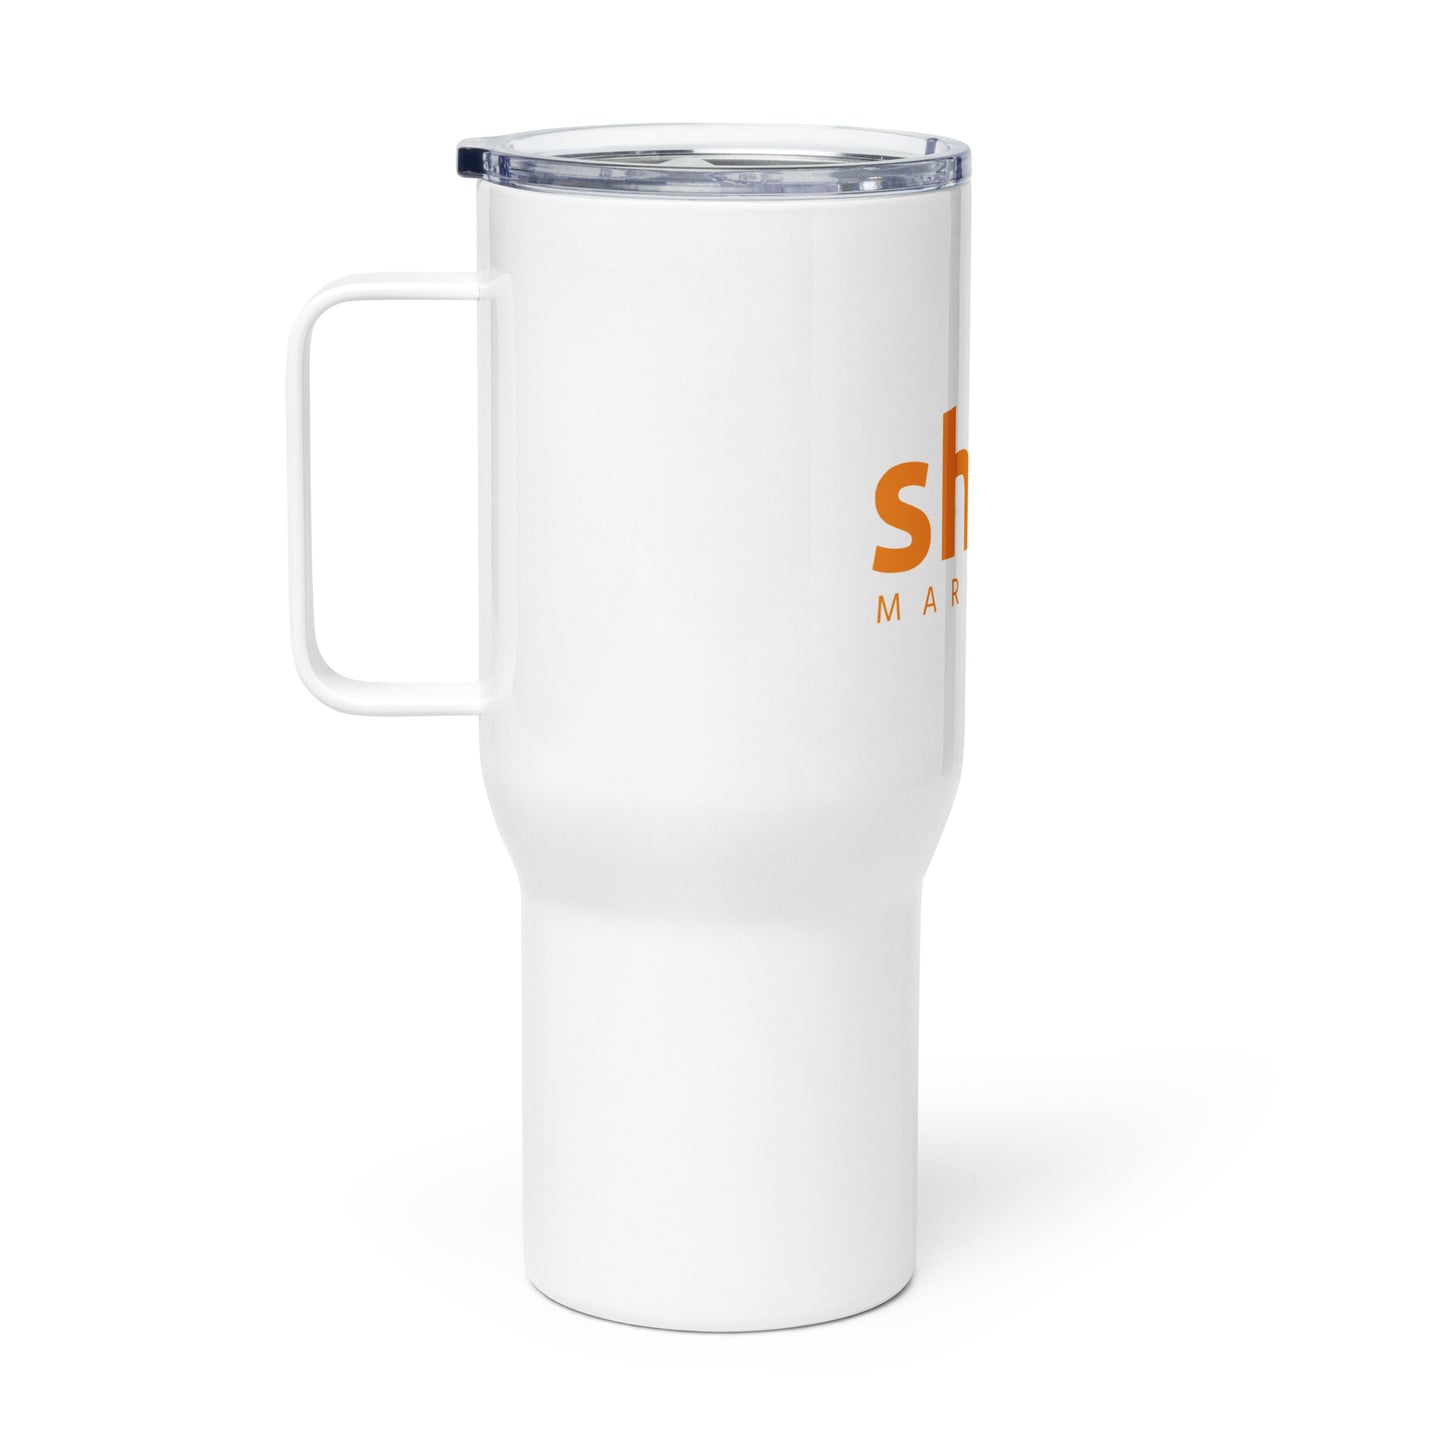 Shire Travel mug with a handle